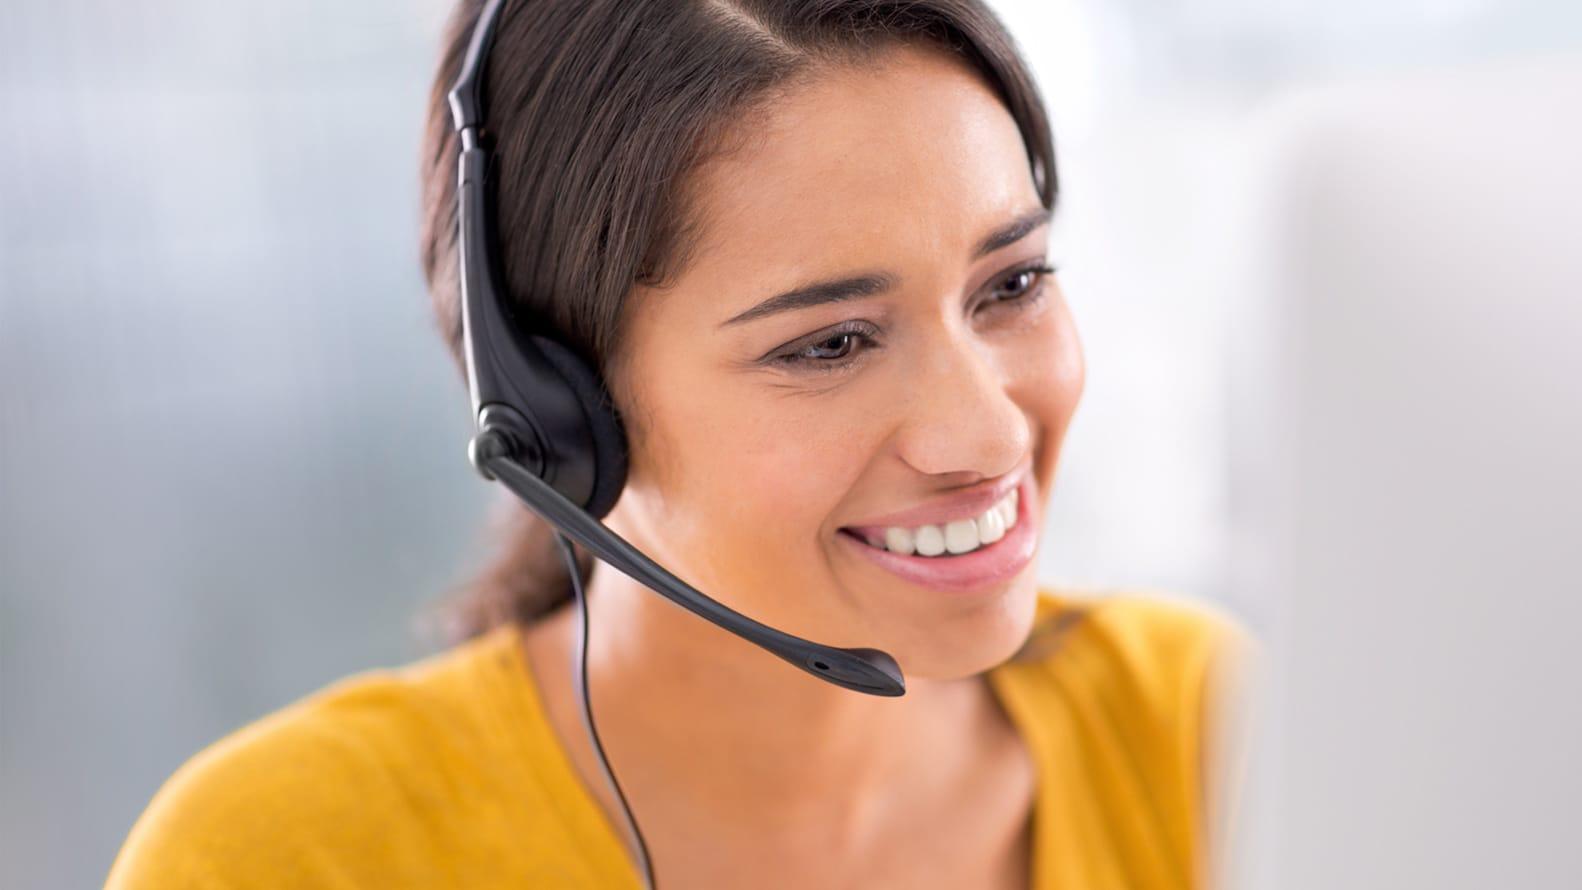 Female customer service rep wearing headset